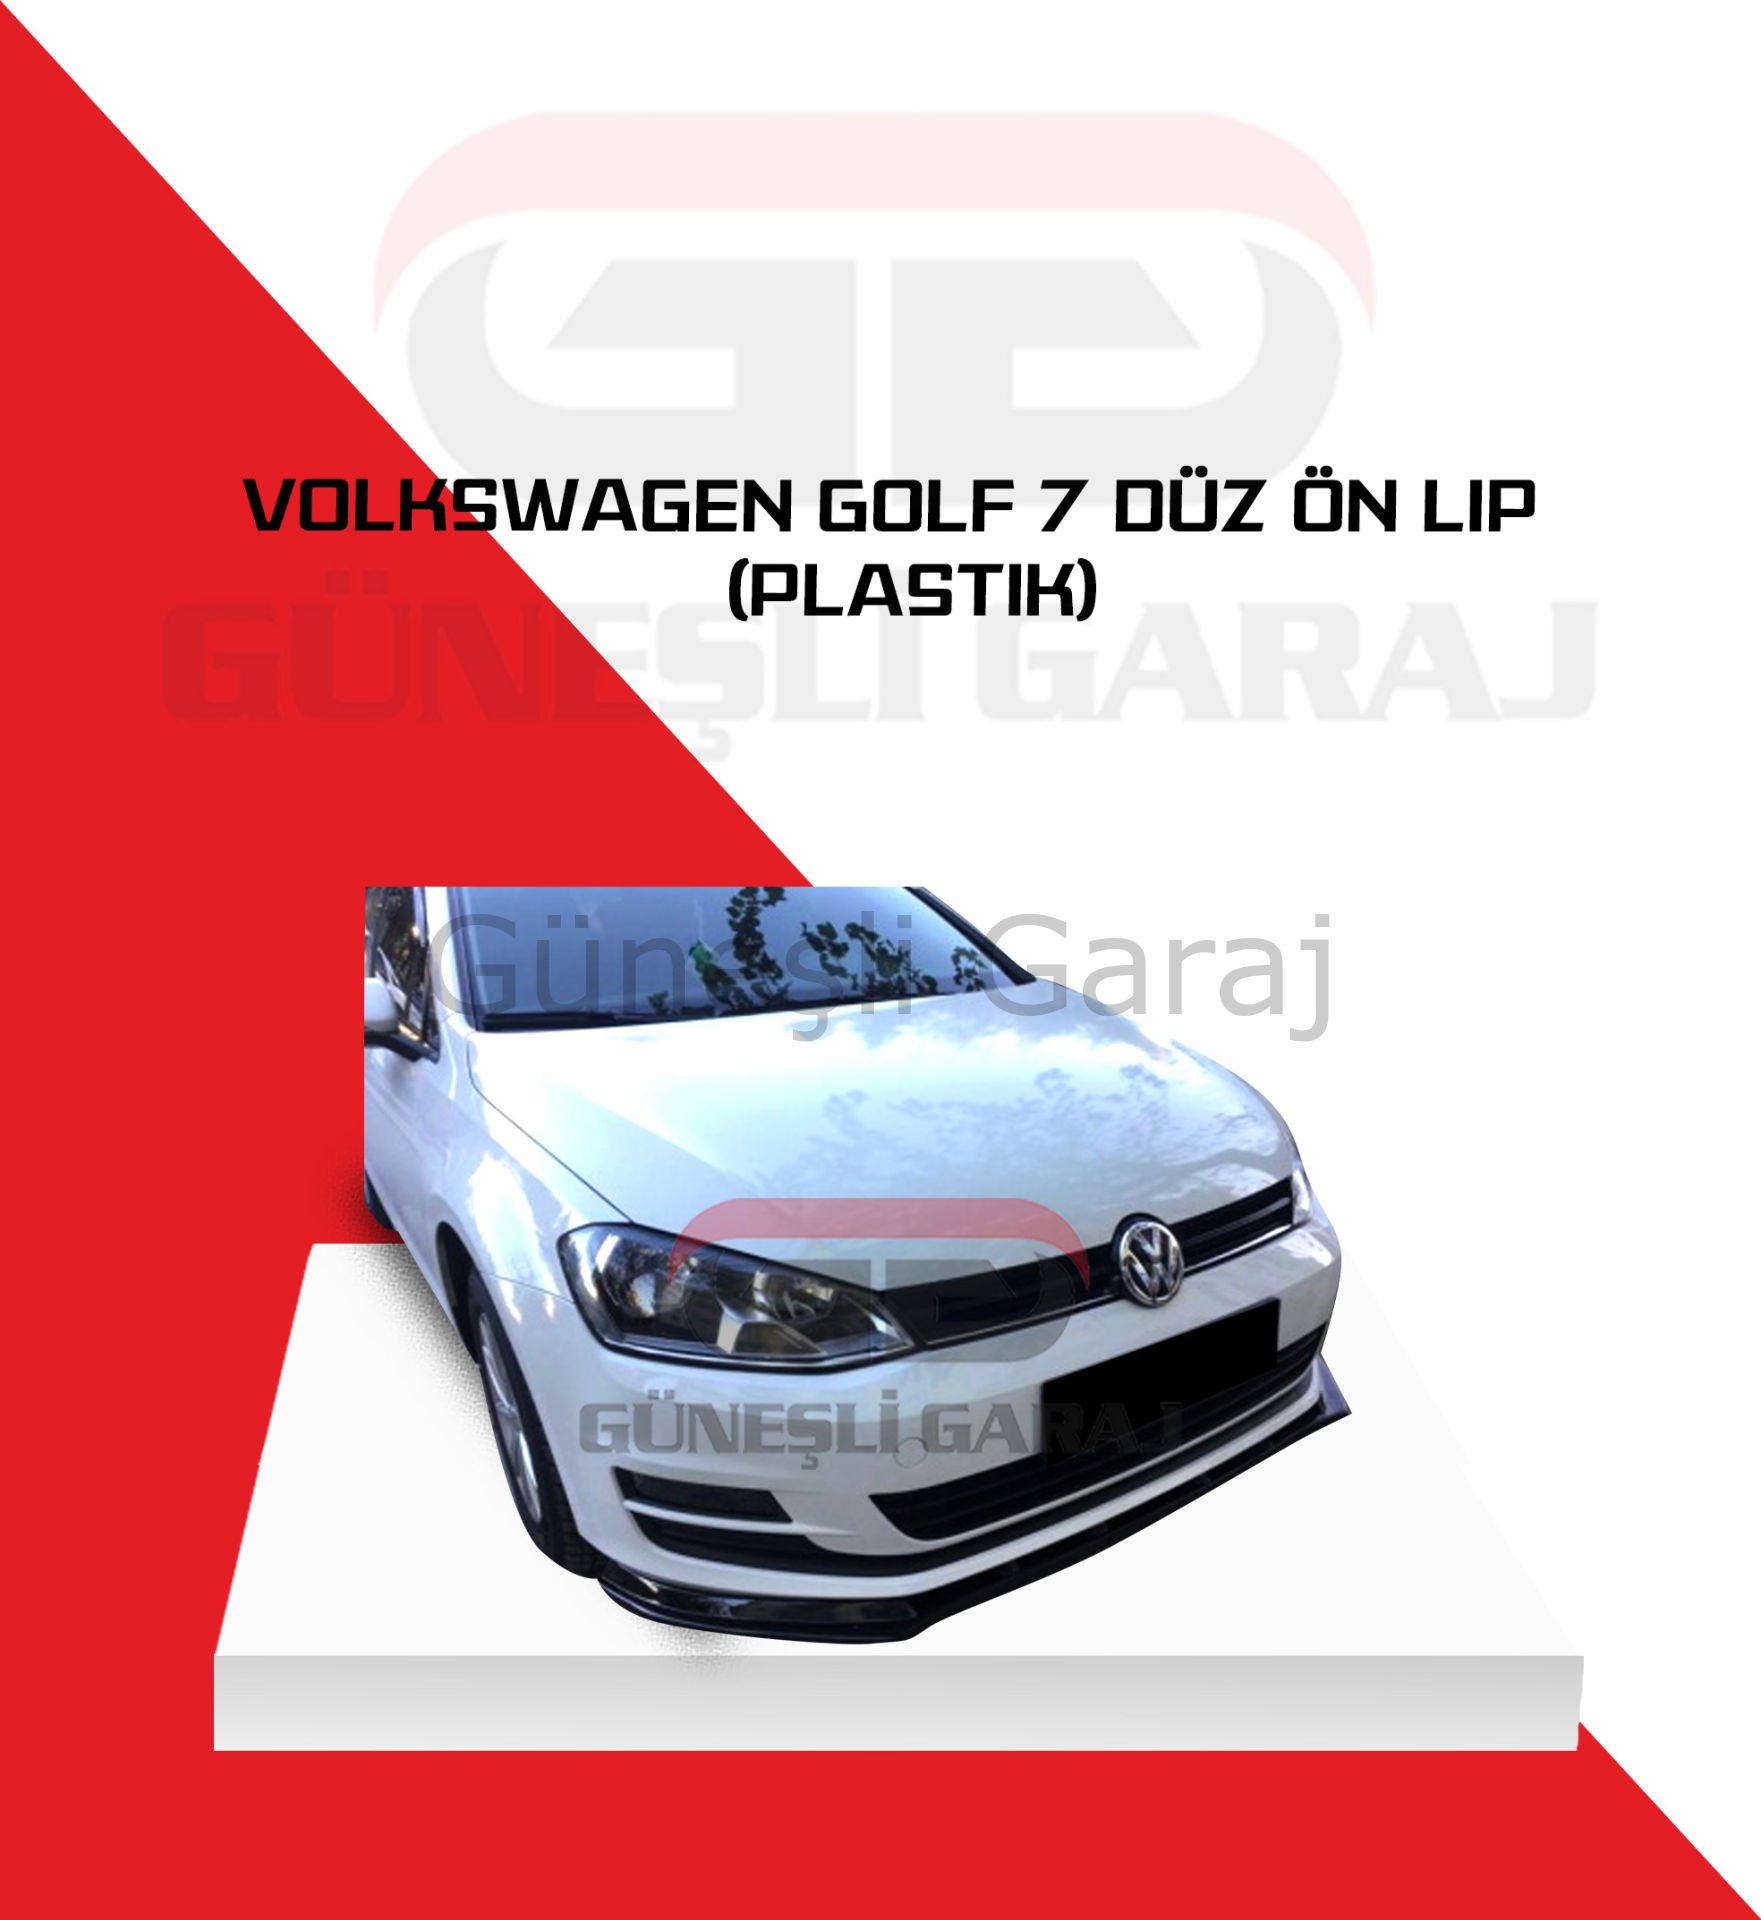 Volkswagen Golf 7 Düz Ön Lip (Plastik)